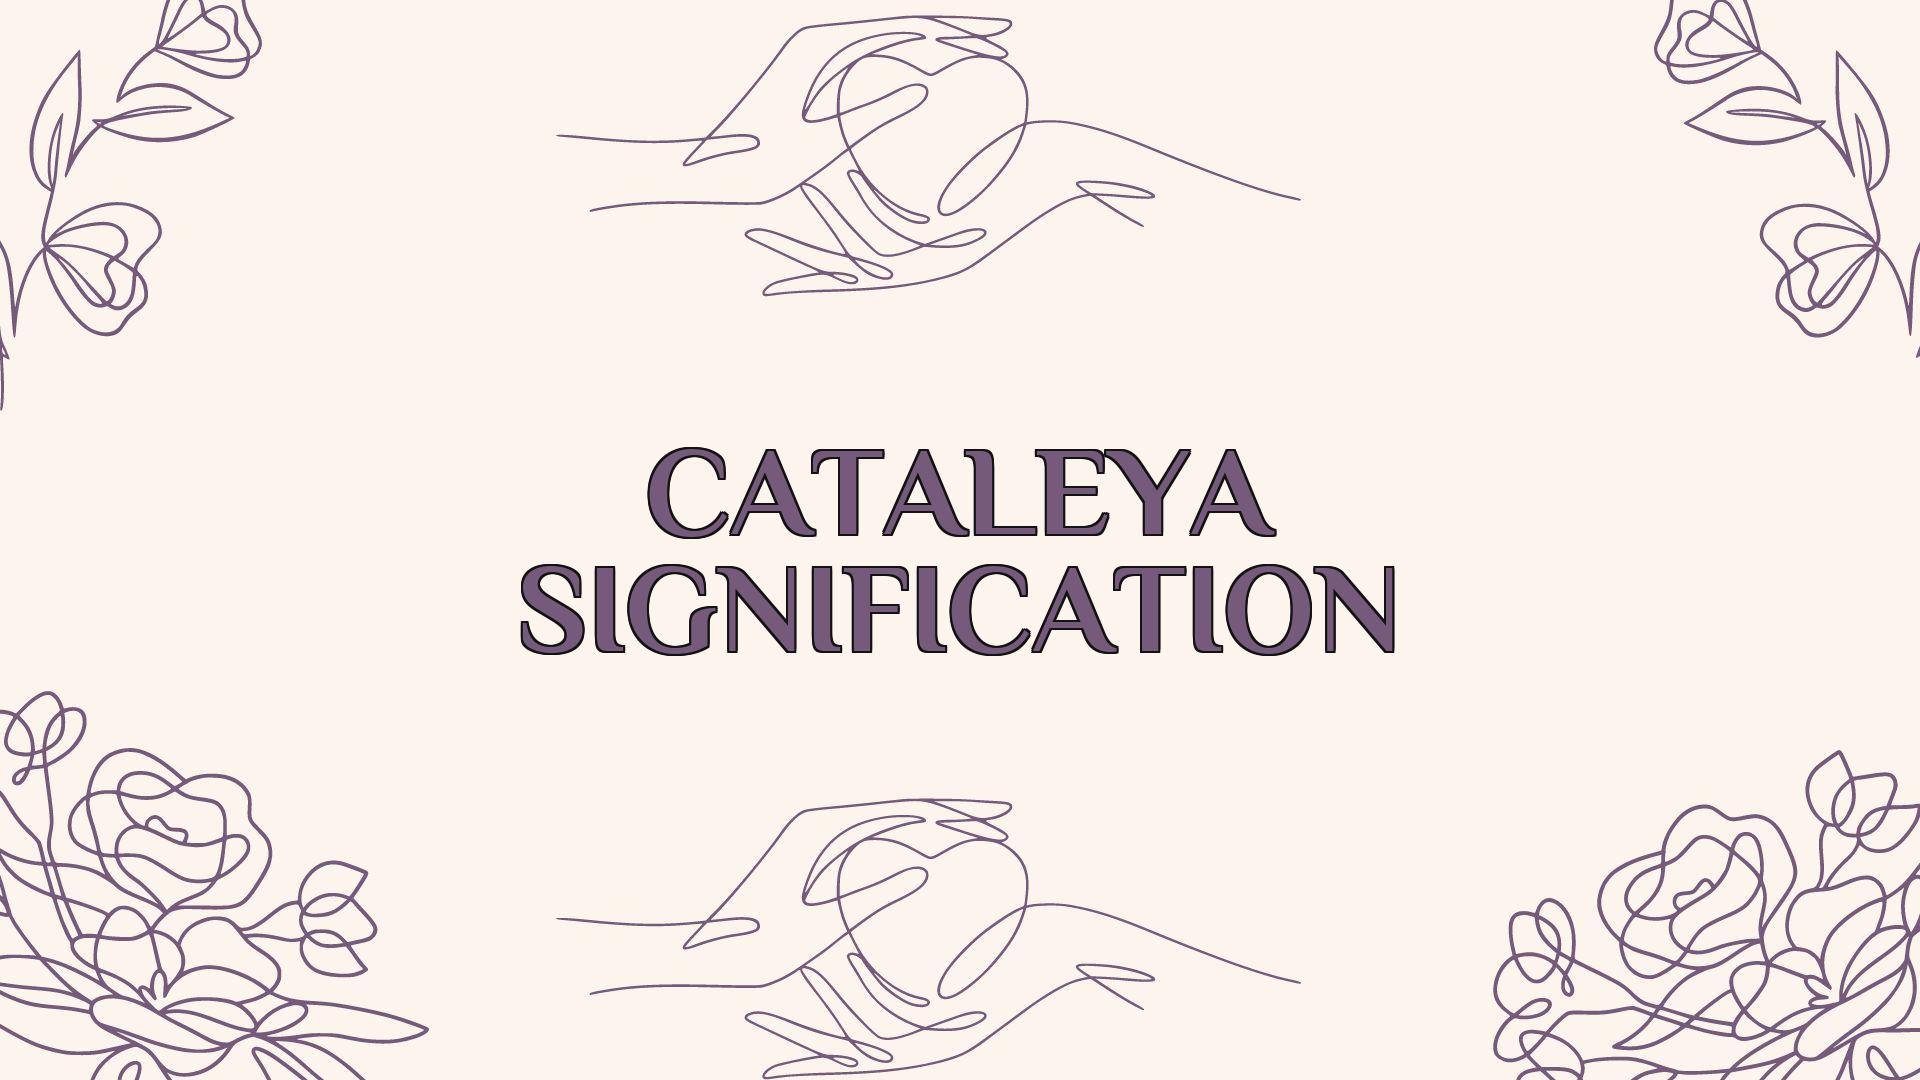 cataleya signification